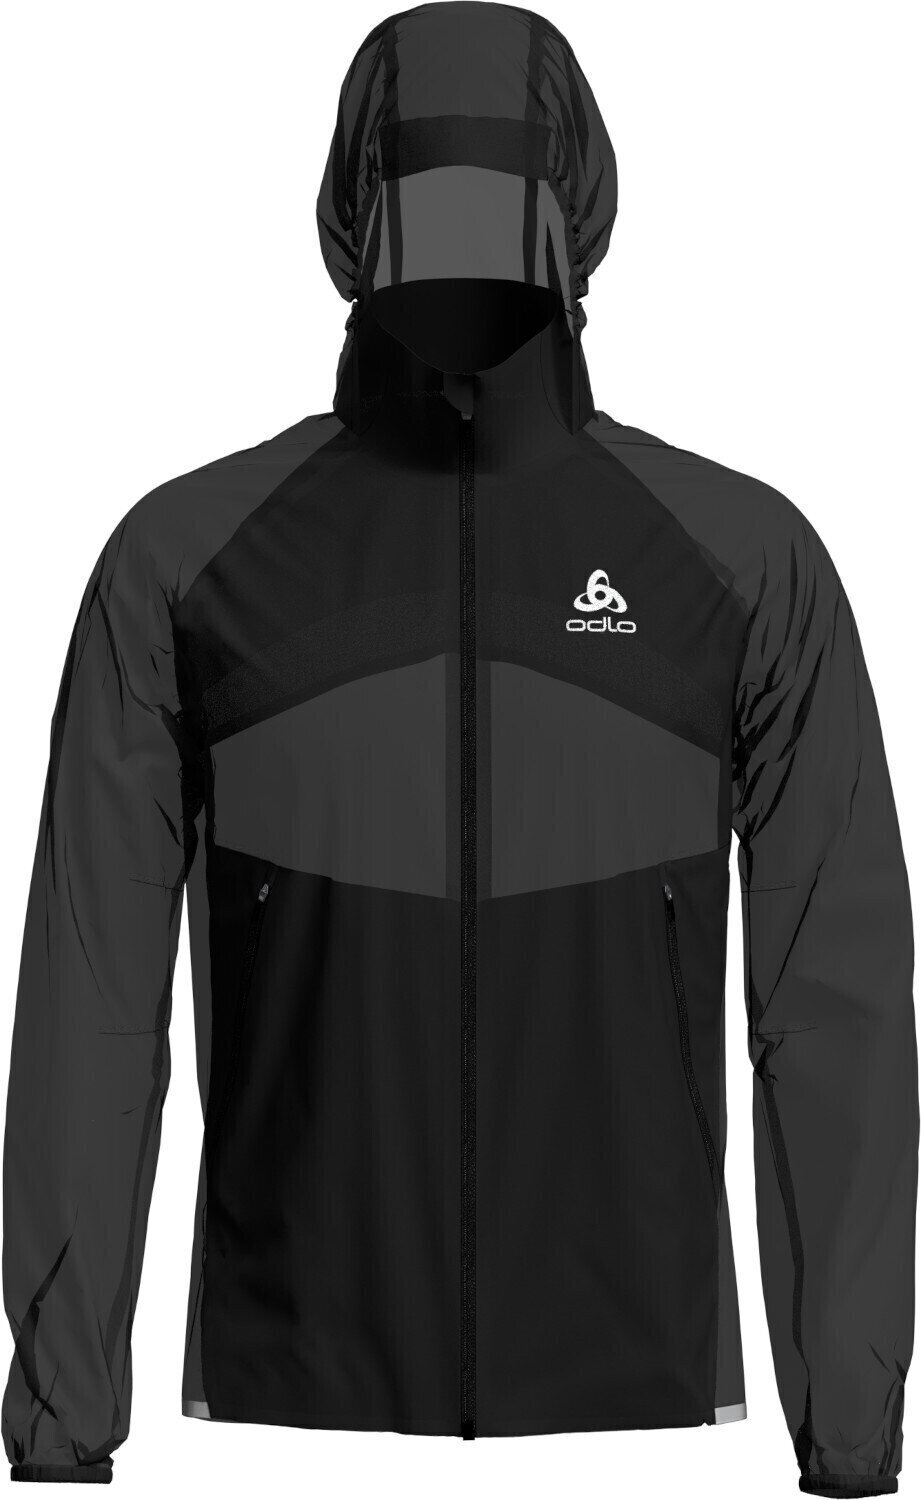 Running jacket Odlo Zeroweight Dual Dry Water Resistant Jacket Black L Running jacket